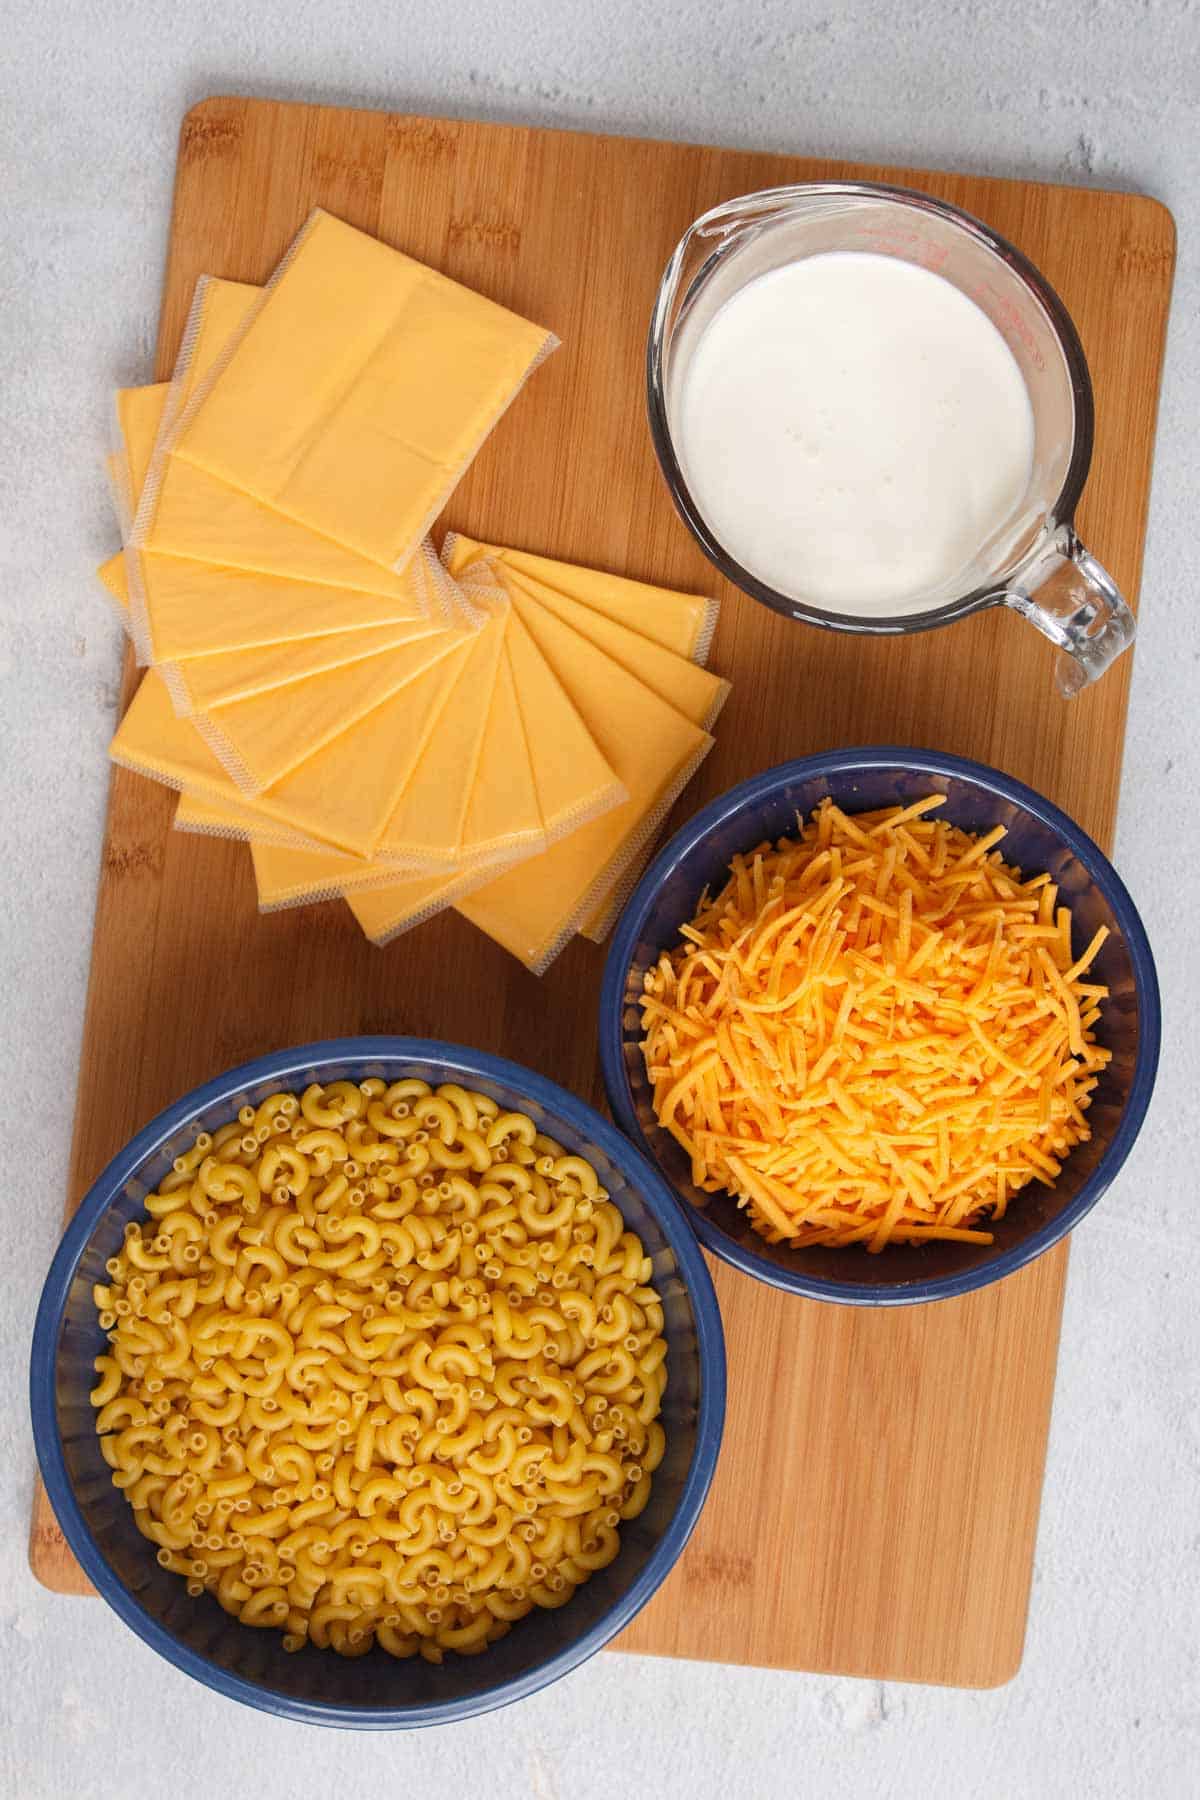 4-Ingredient Mac and Cheese Ingredients